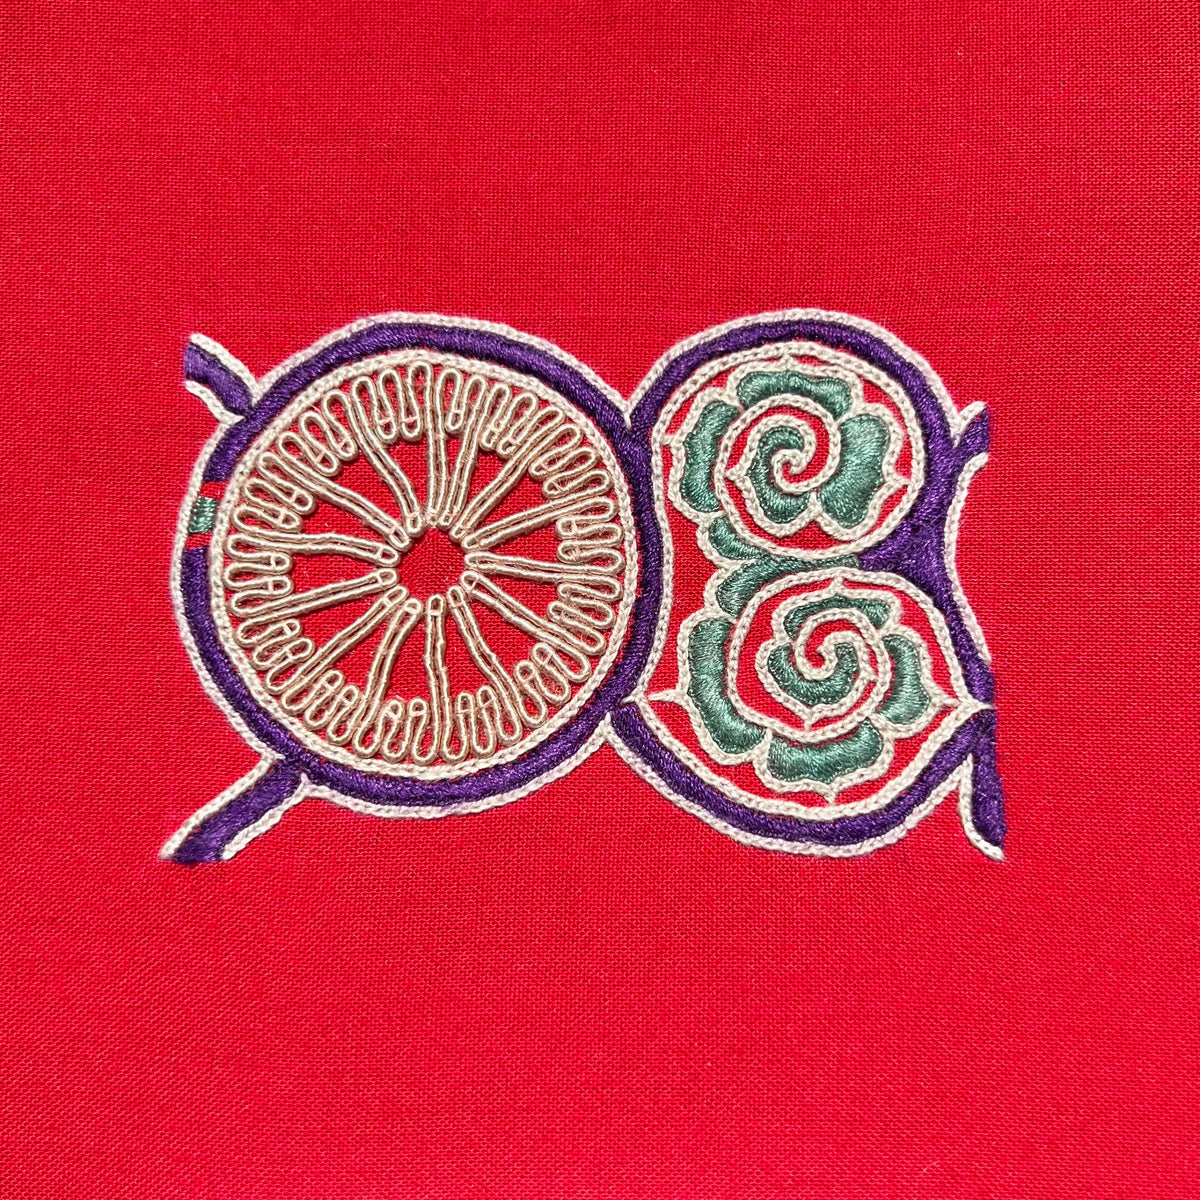 World Embroidery Class Series II